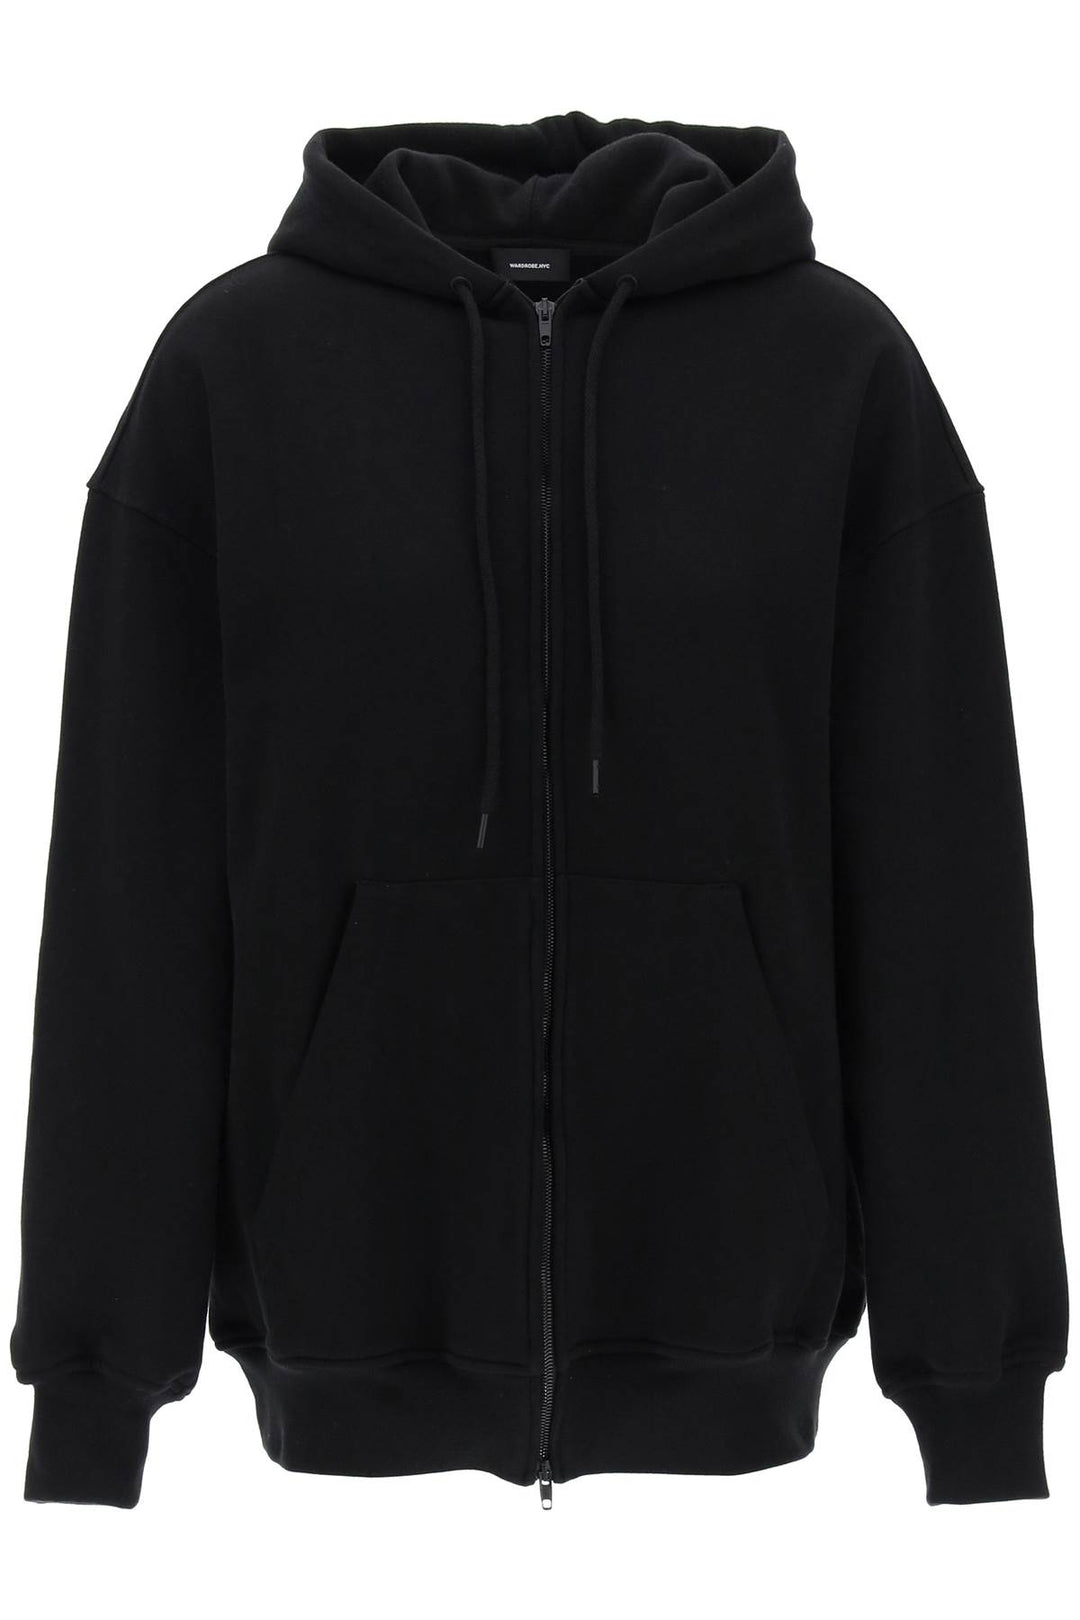 Wardrobe.nyc oversized zip-up hoodie-0